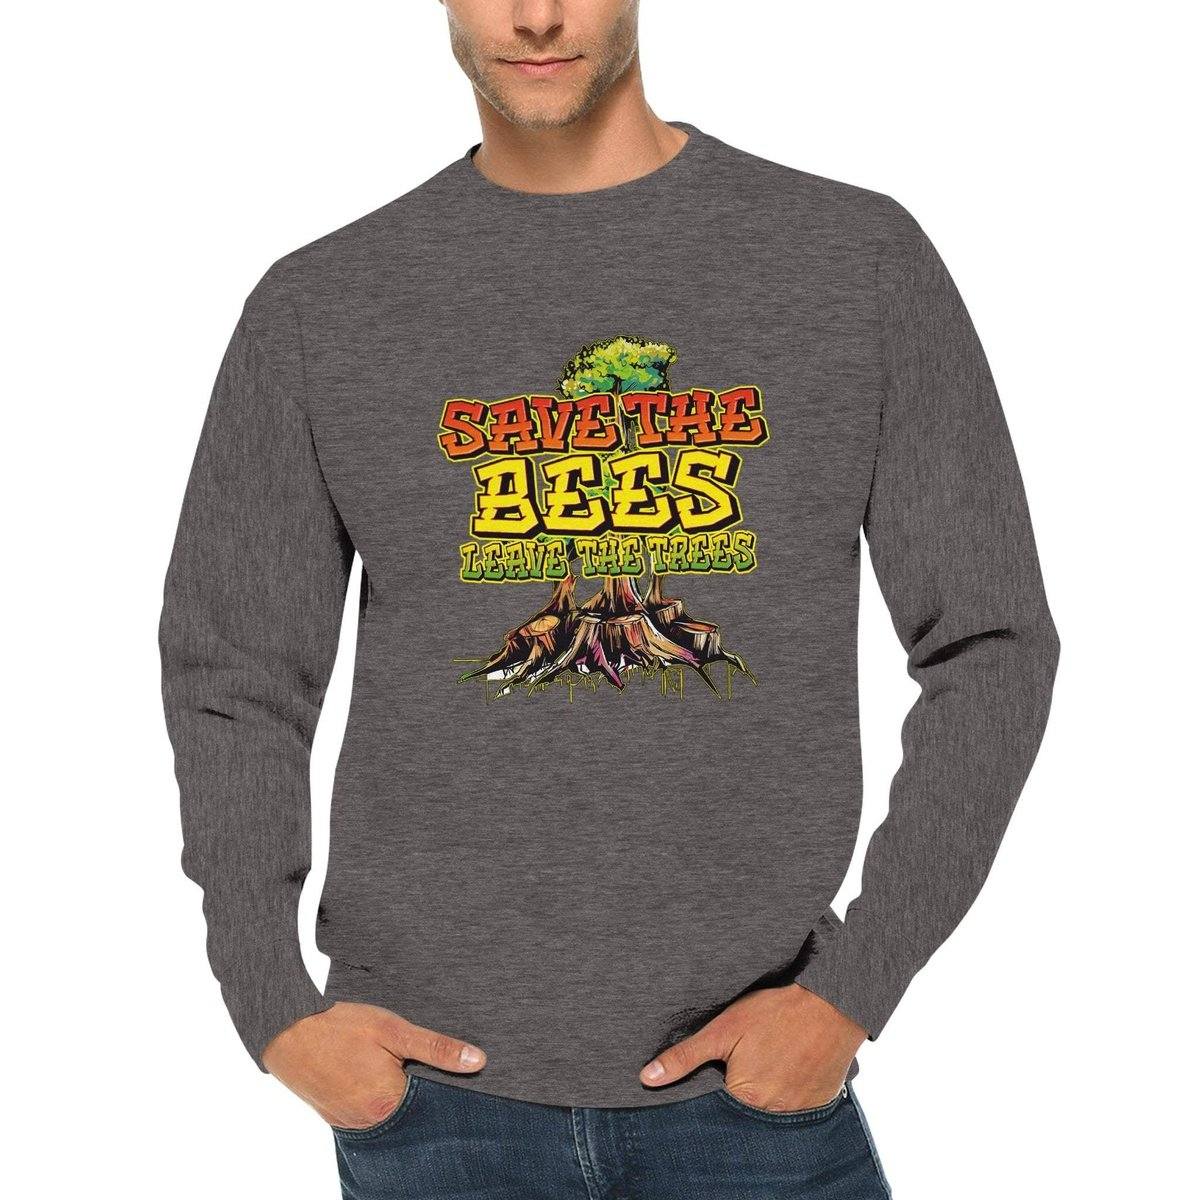 Save The Bees Jumper - Leave The Trees - Stumps - Premium Unisex Crewneck Sweatshirt Australia Online Color Charcoal Heather / S